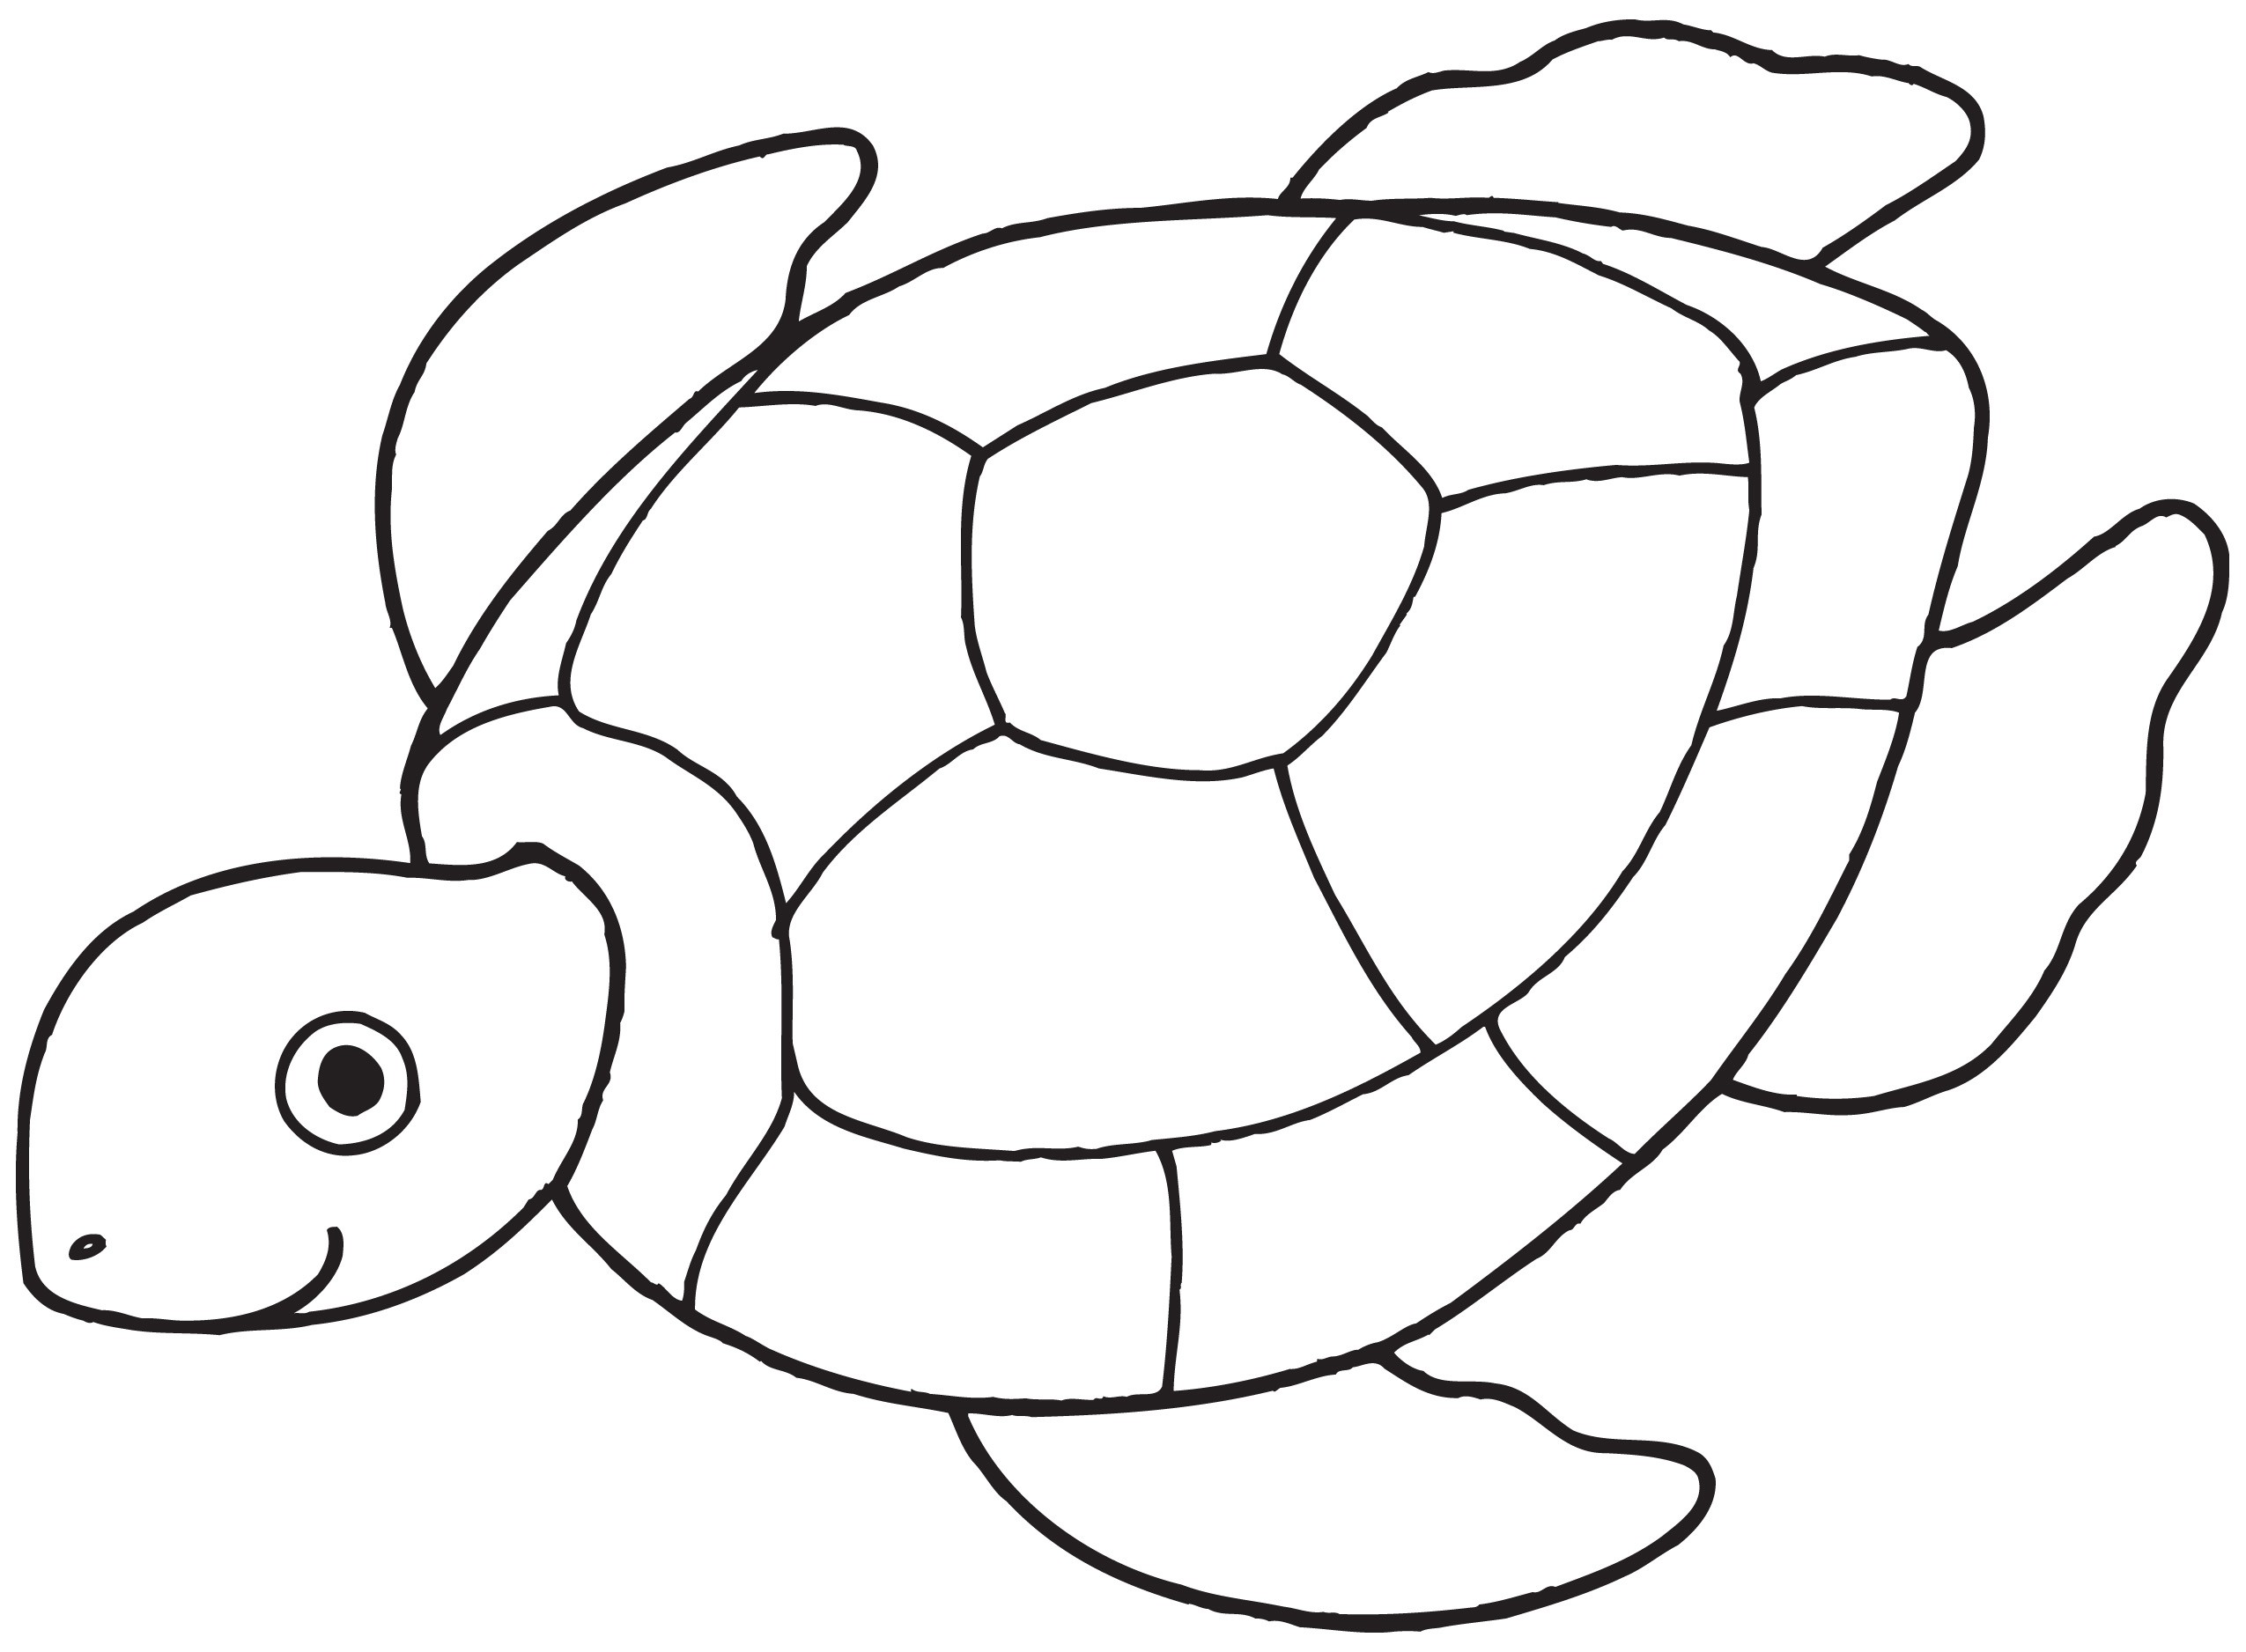 Turtle Free Clip Art - ClipArt Best